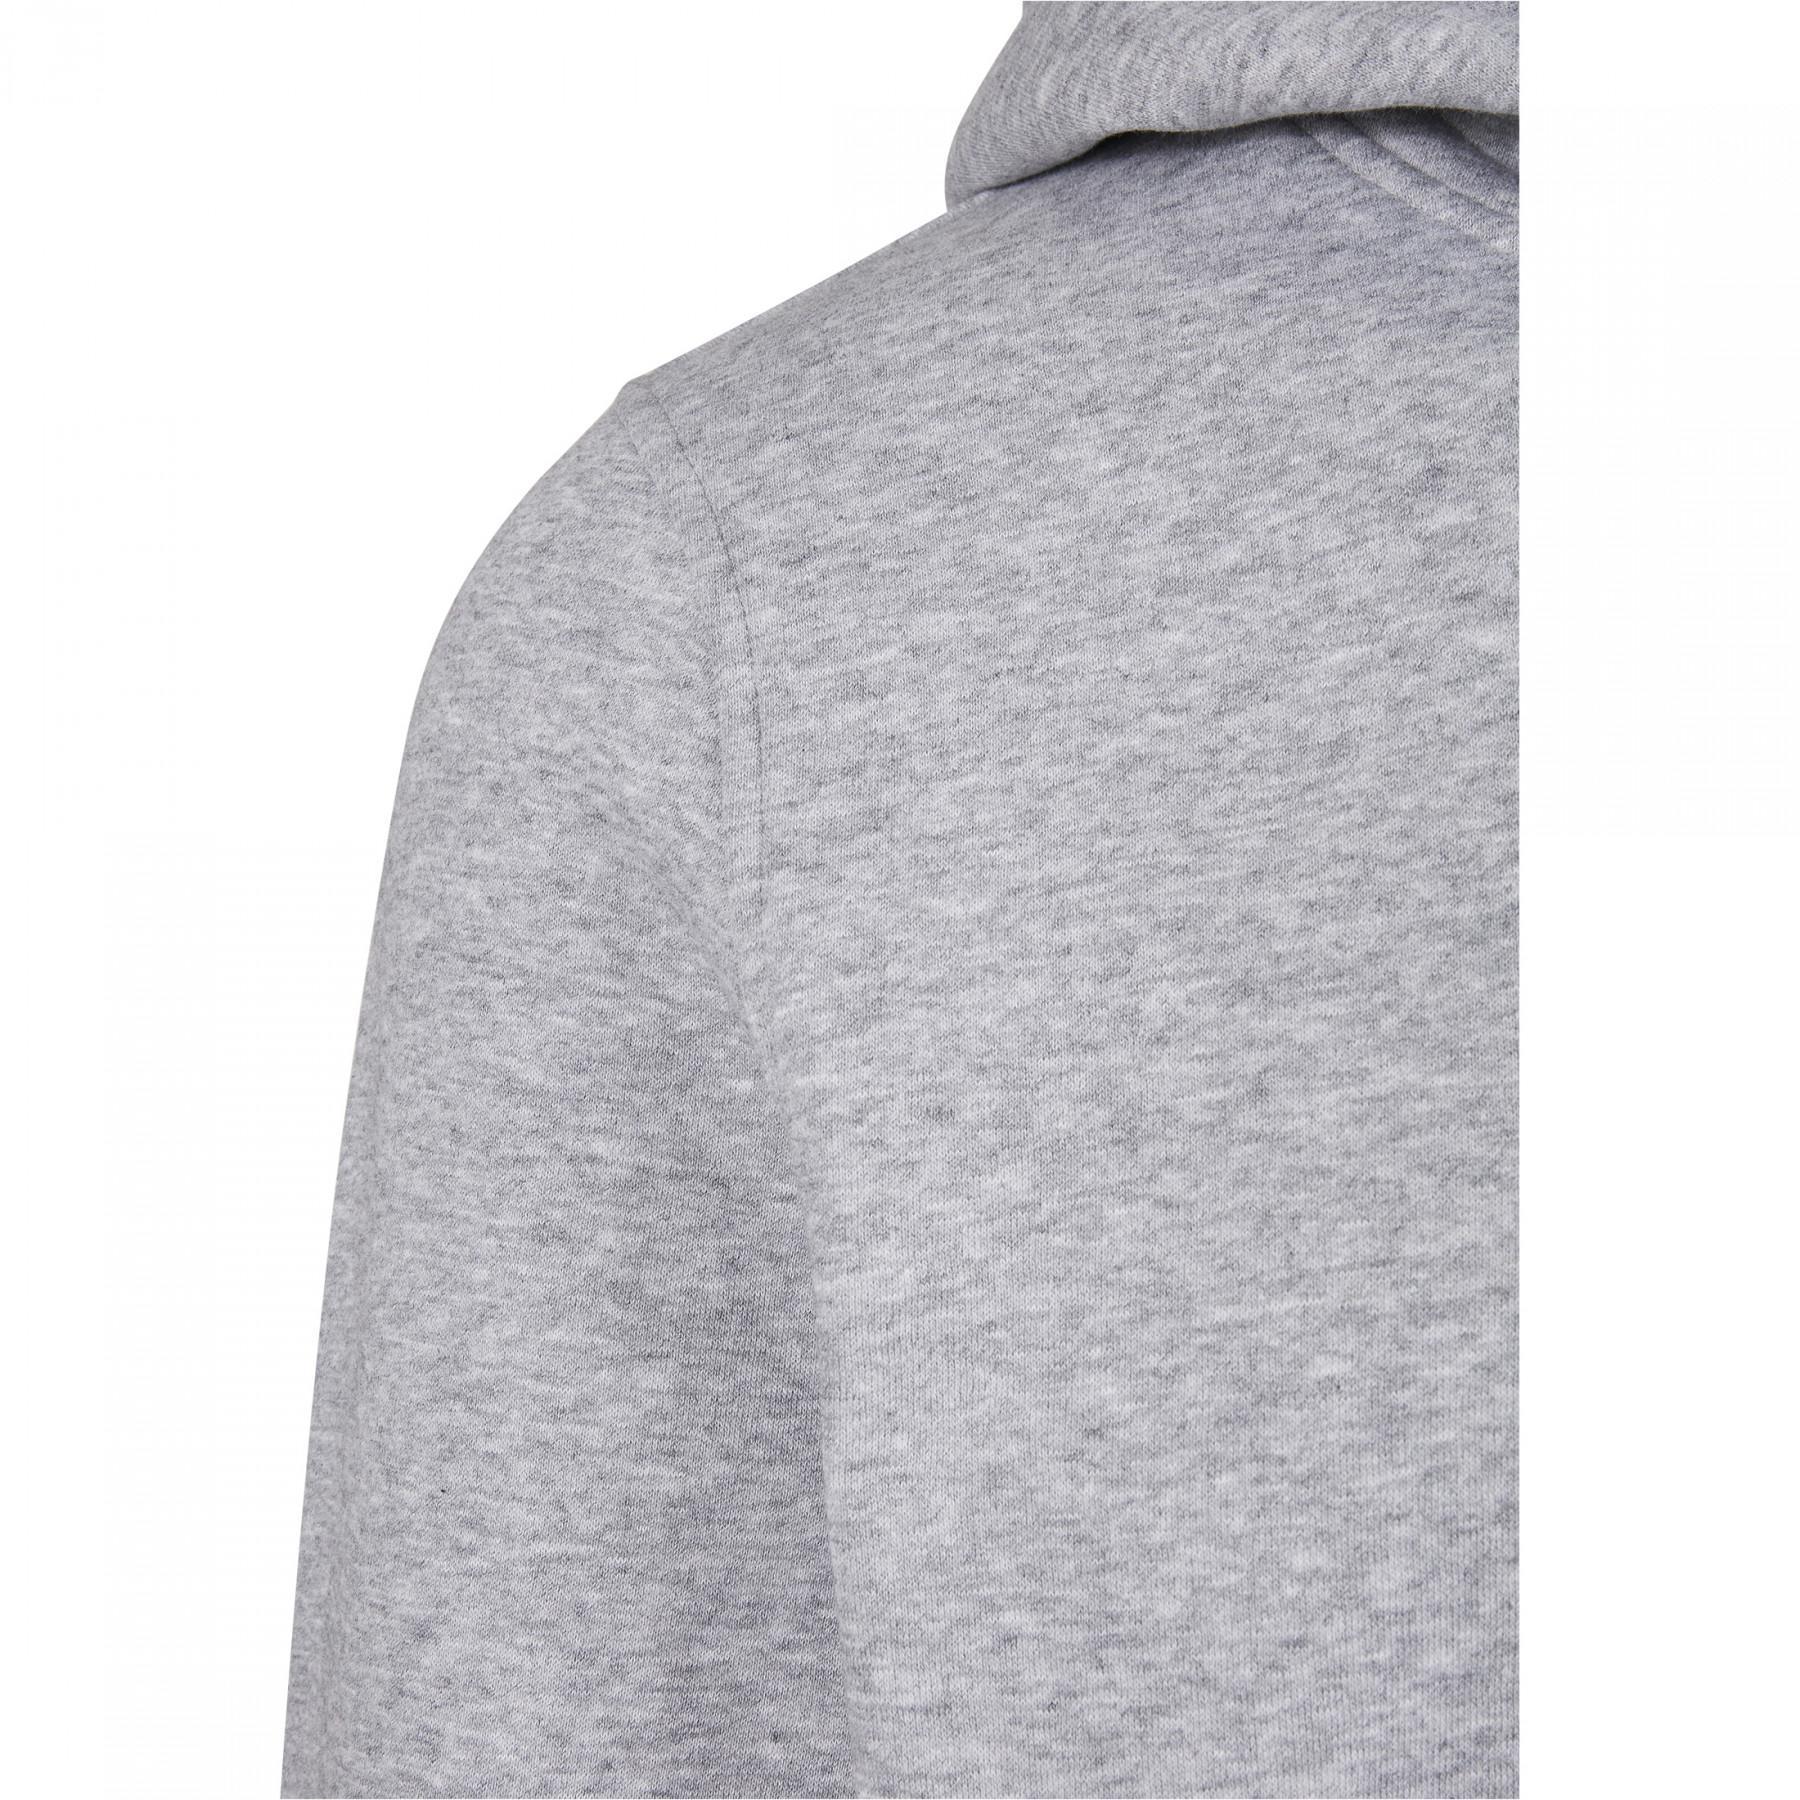 Sweatshirt à capuche Urban Classics starter two color logo